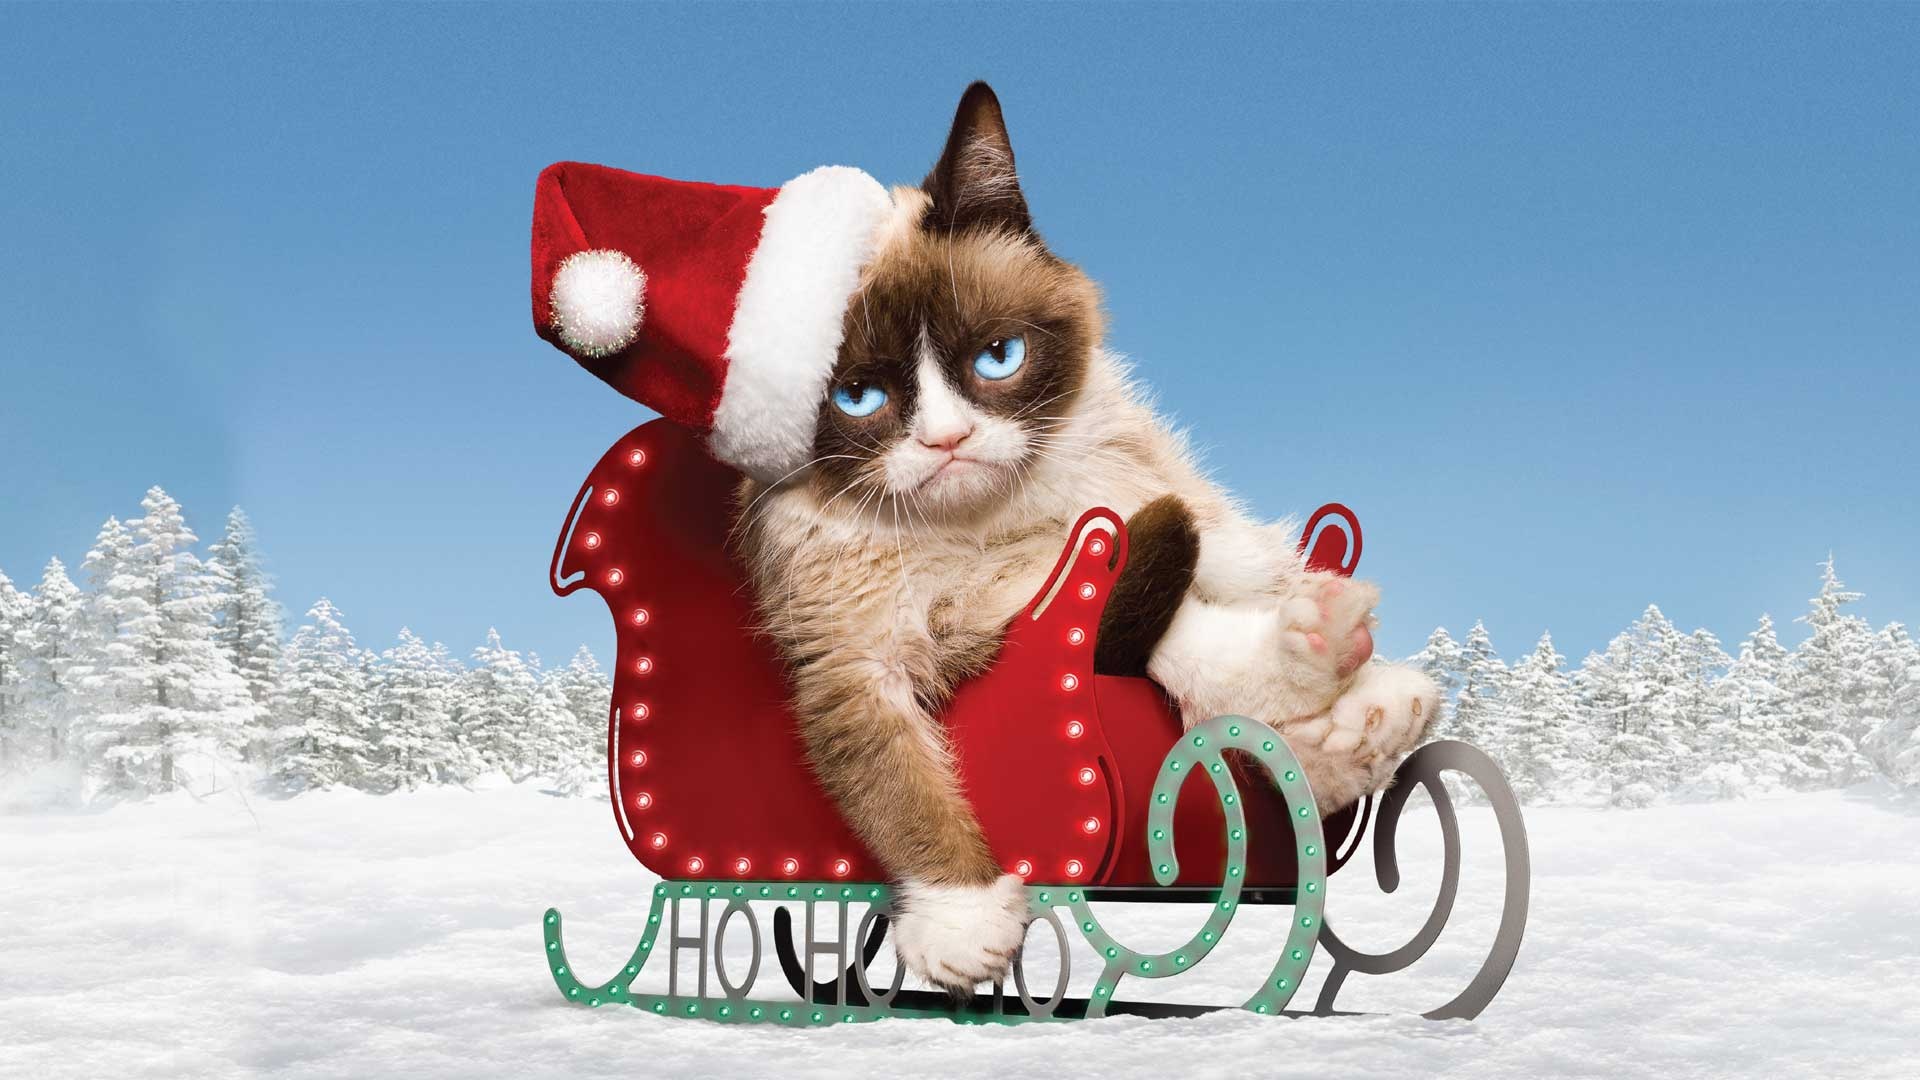 Grumpy Cat Christmas wallpapers, post, Festive backgrounds, Grumpy cat's holiday spirit, 1920x1080 Full HD Desktop